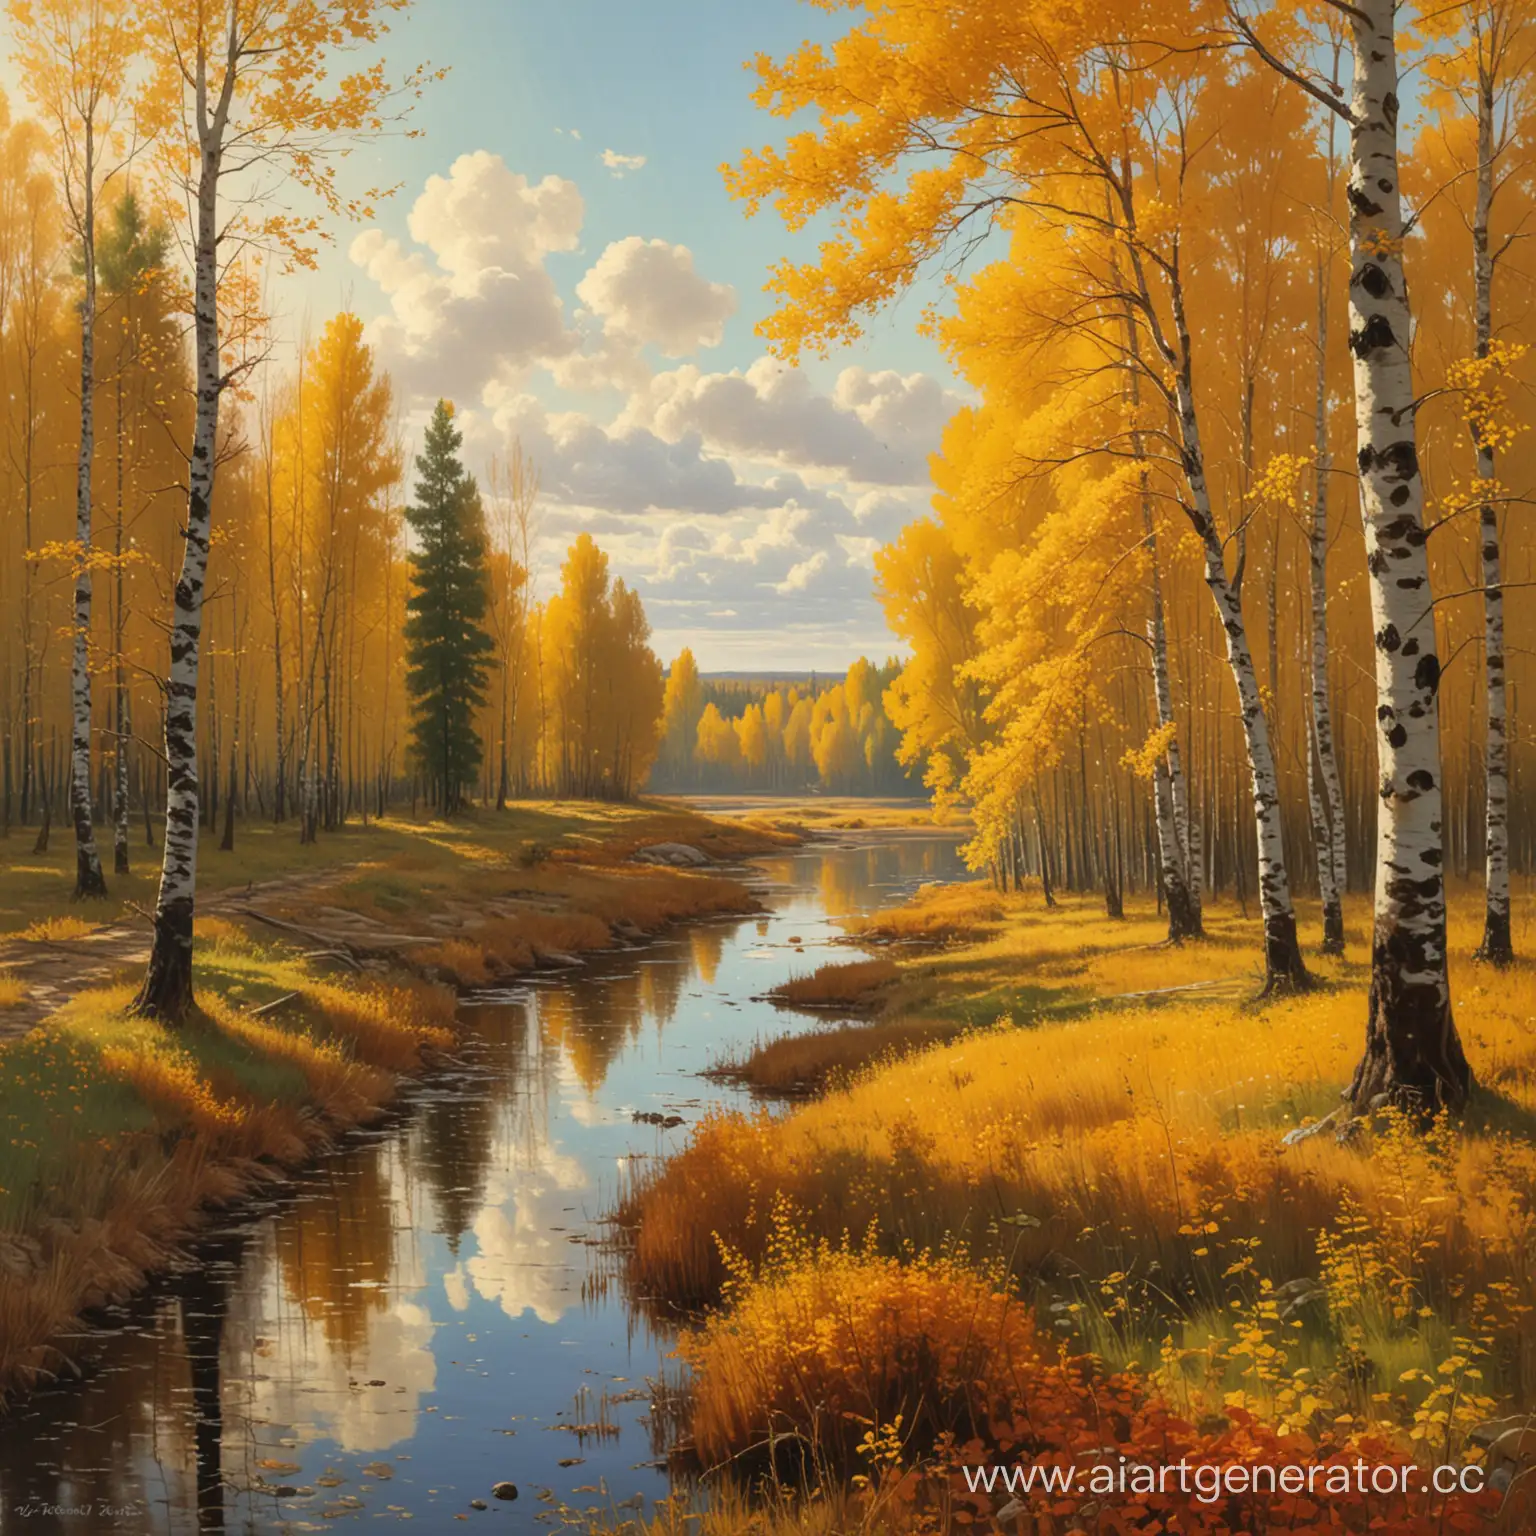 Serene-Landscape-in-Golden-Autumn-Inspired-by-Levitans-Style